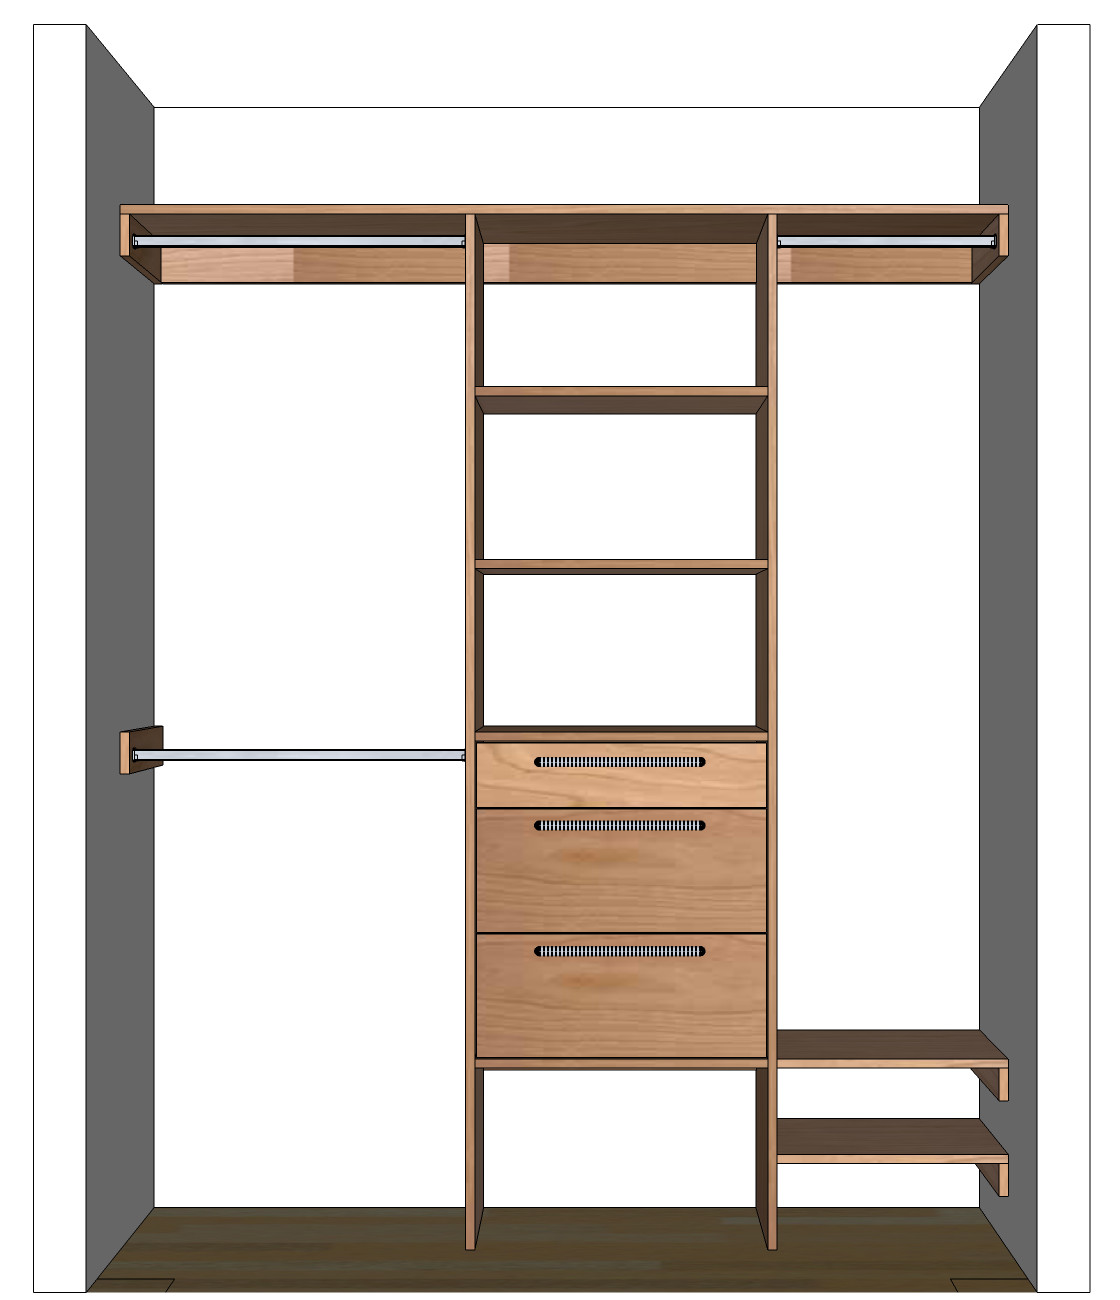 Best ideas about DIY Closet Organizer
. Save or Pin DIY Closet Organizer Plans For 5 to 8 Closet Now.